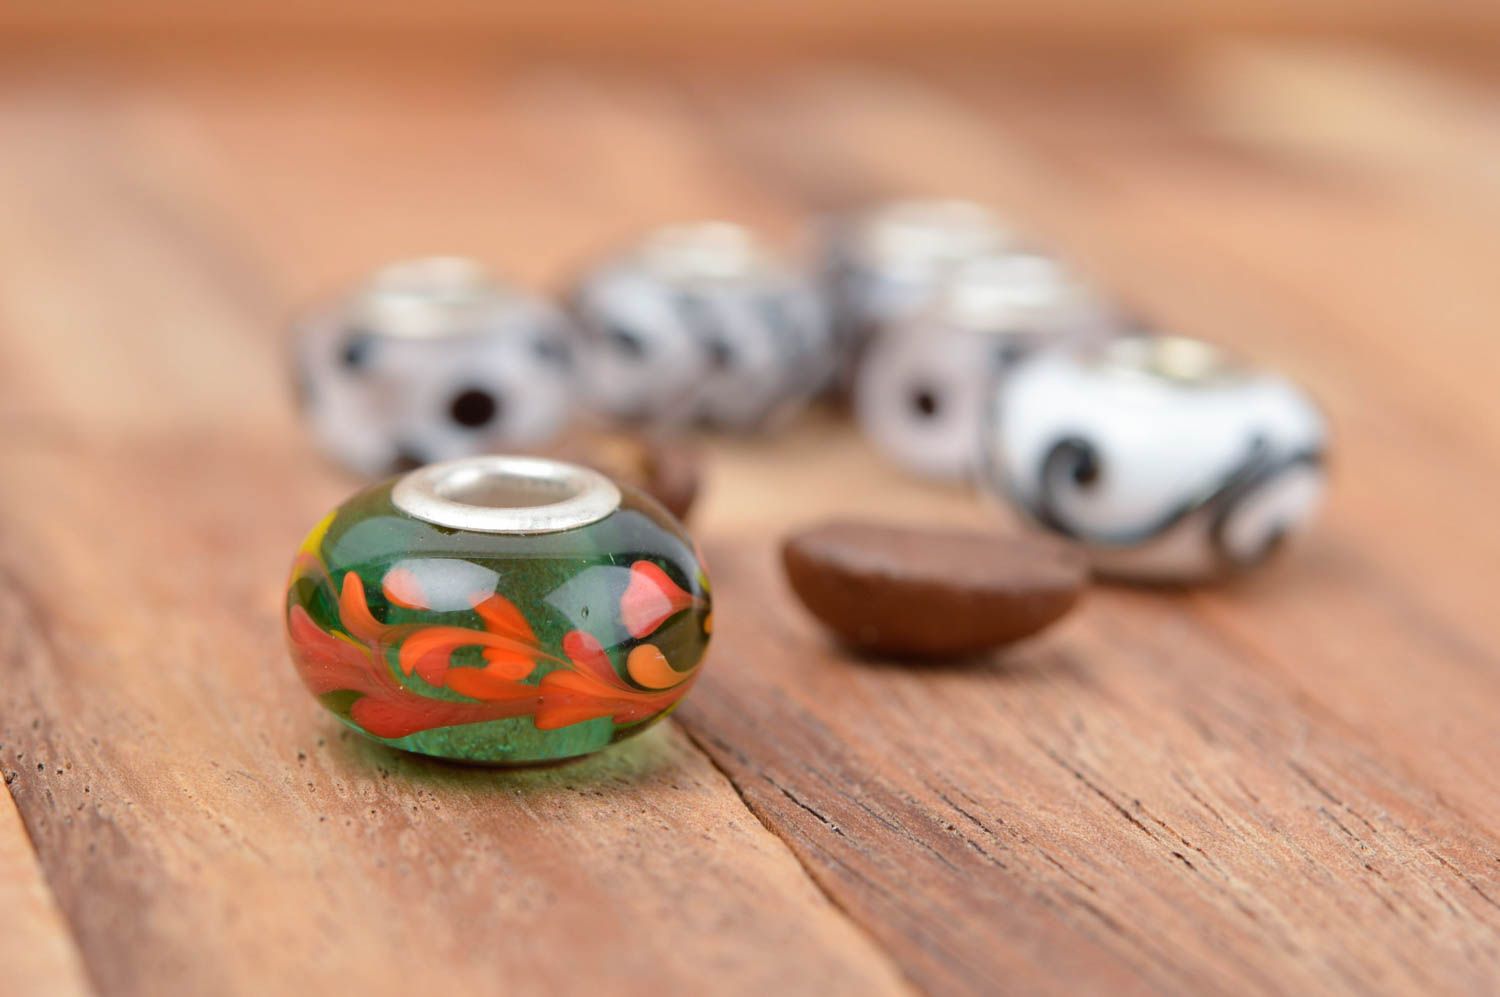 Beautiful handmade glass bead jewelry designs jewelry making supplies gift ideas photo 1